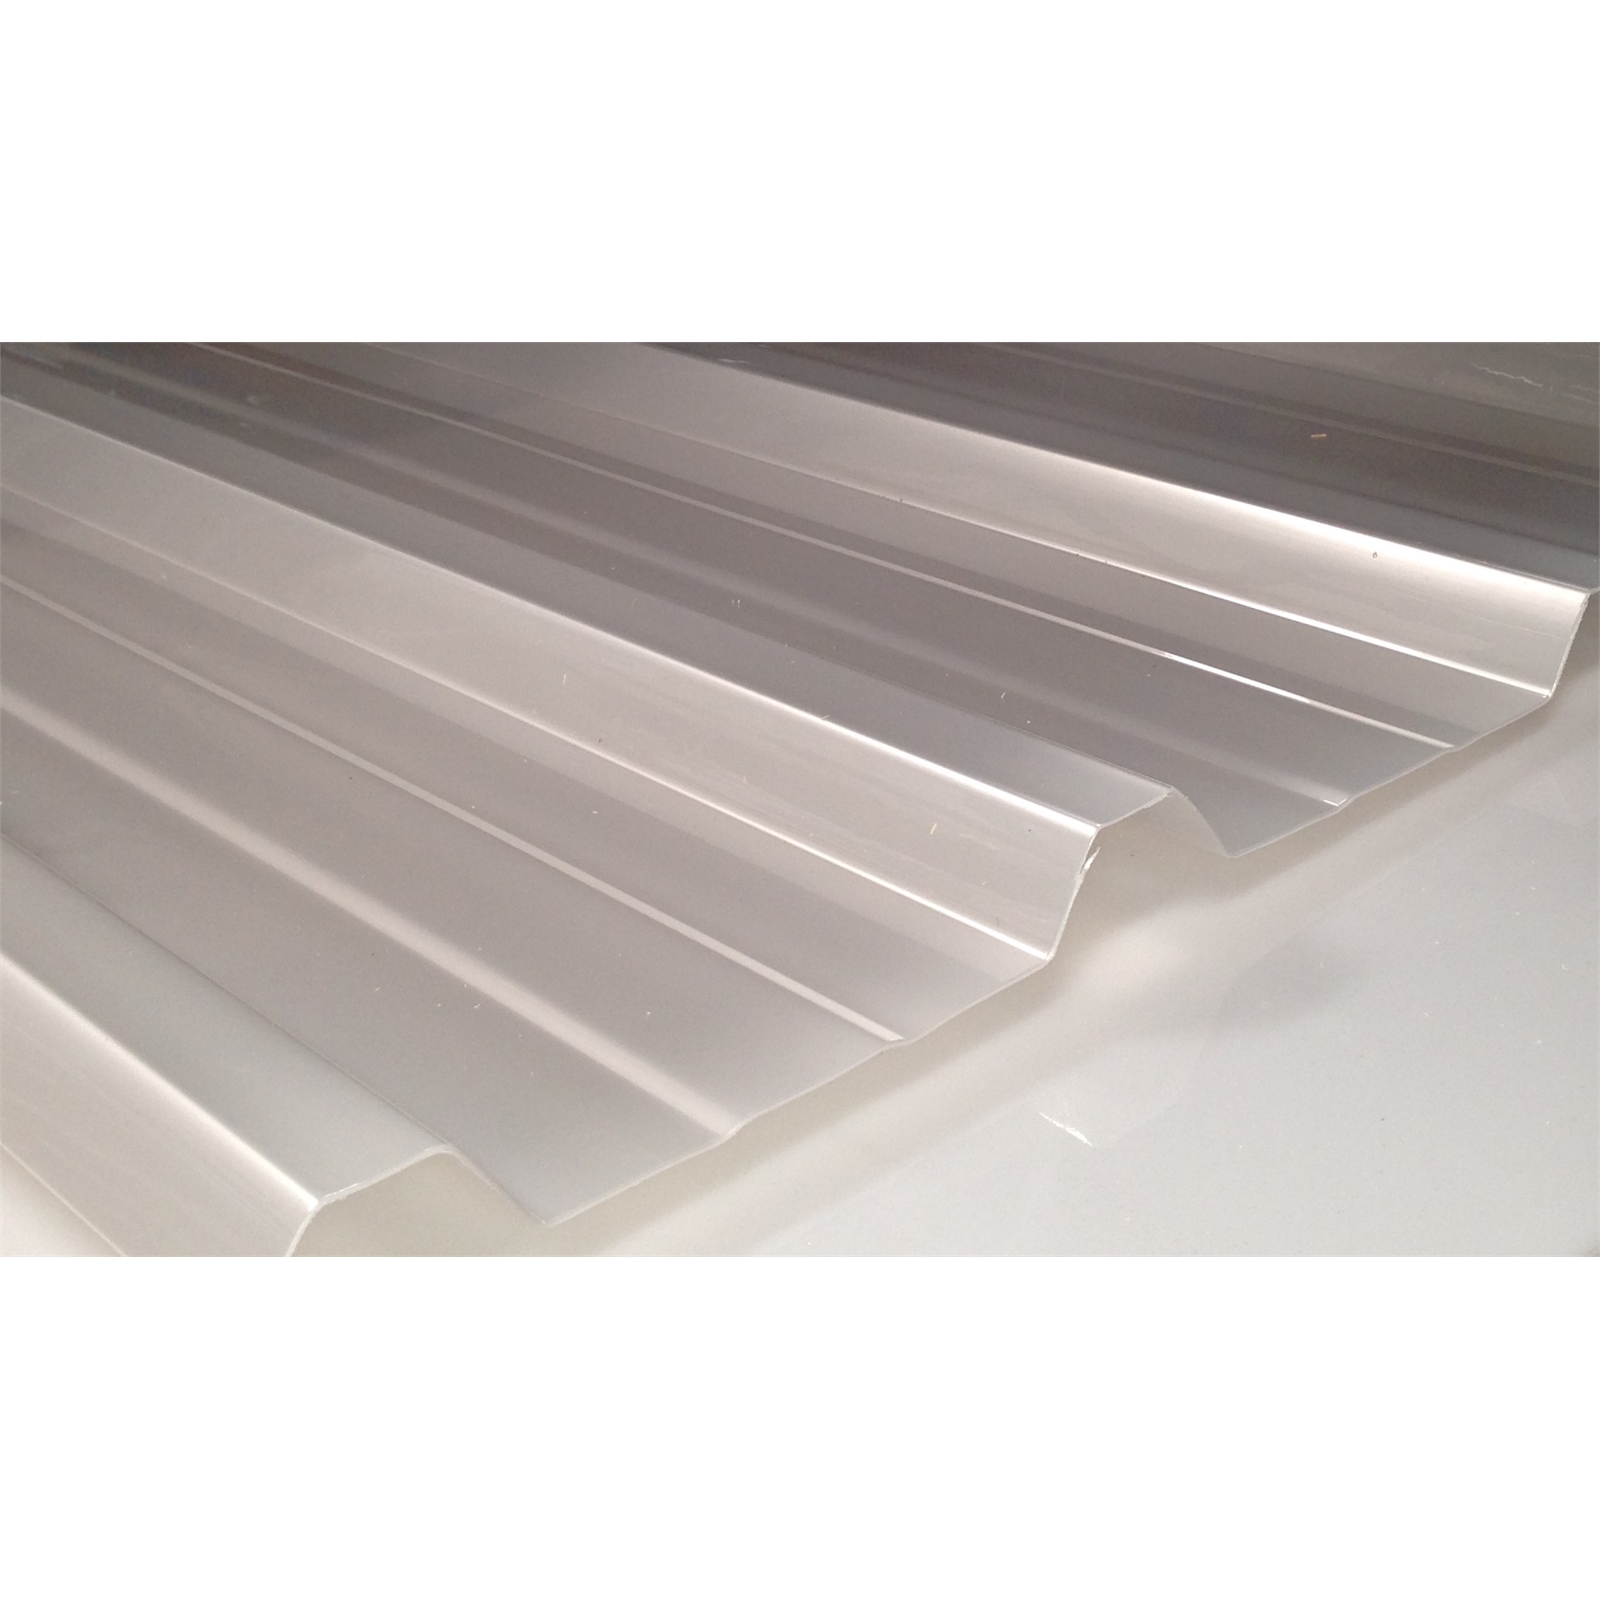 Suntuf Trimdek 1.0 x 7.2m Metallic Ice Polycarbonate Roofing